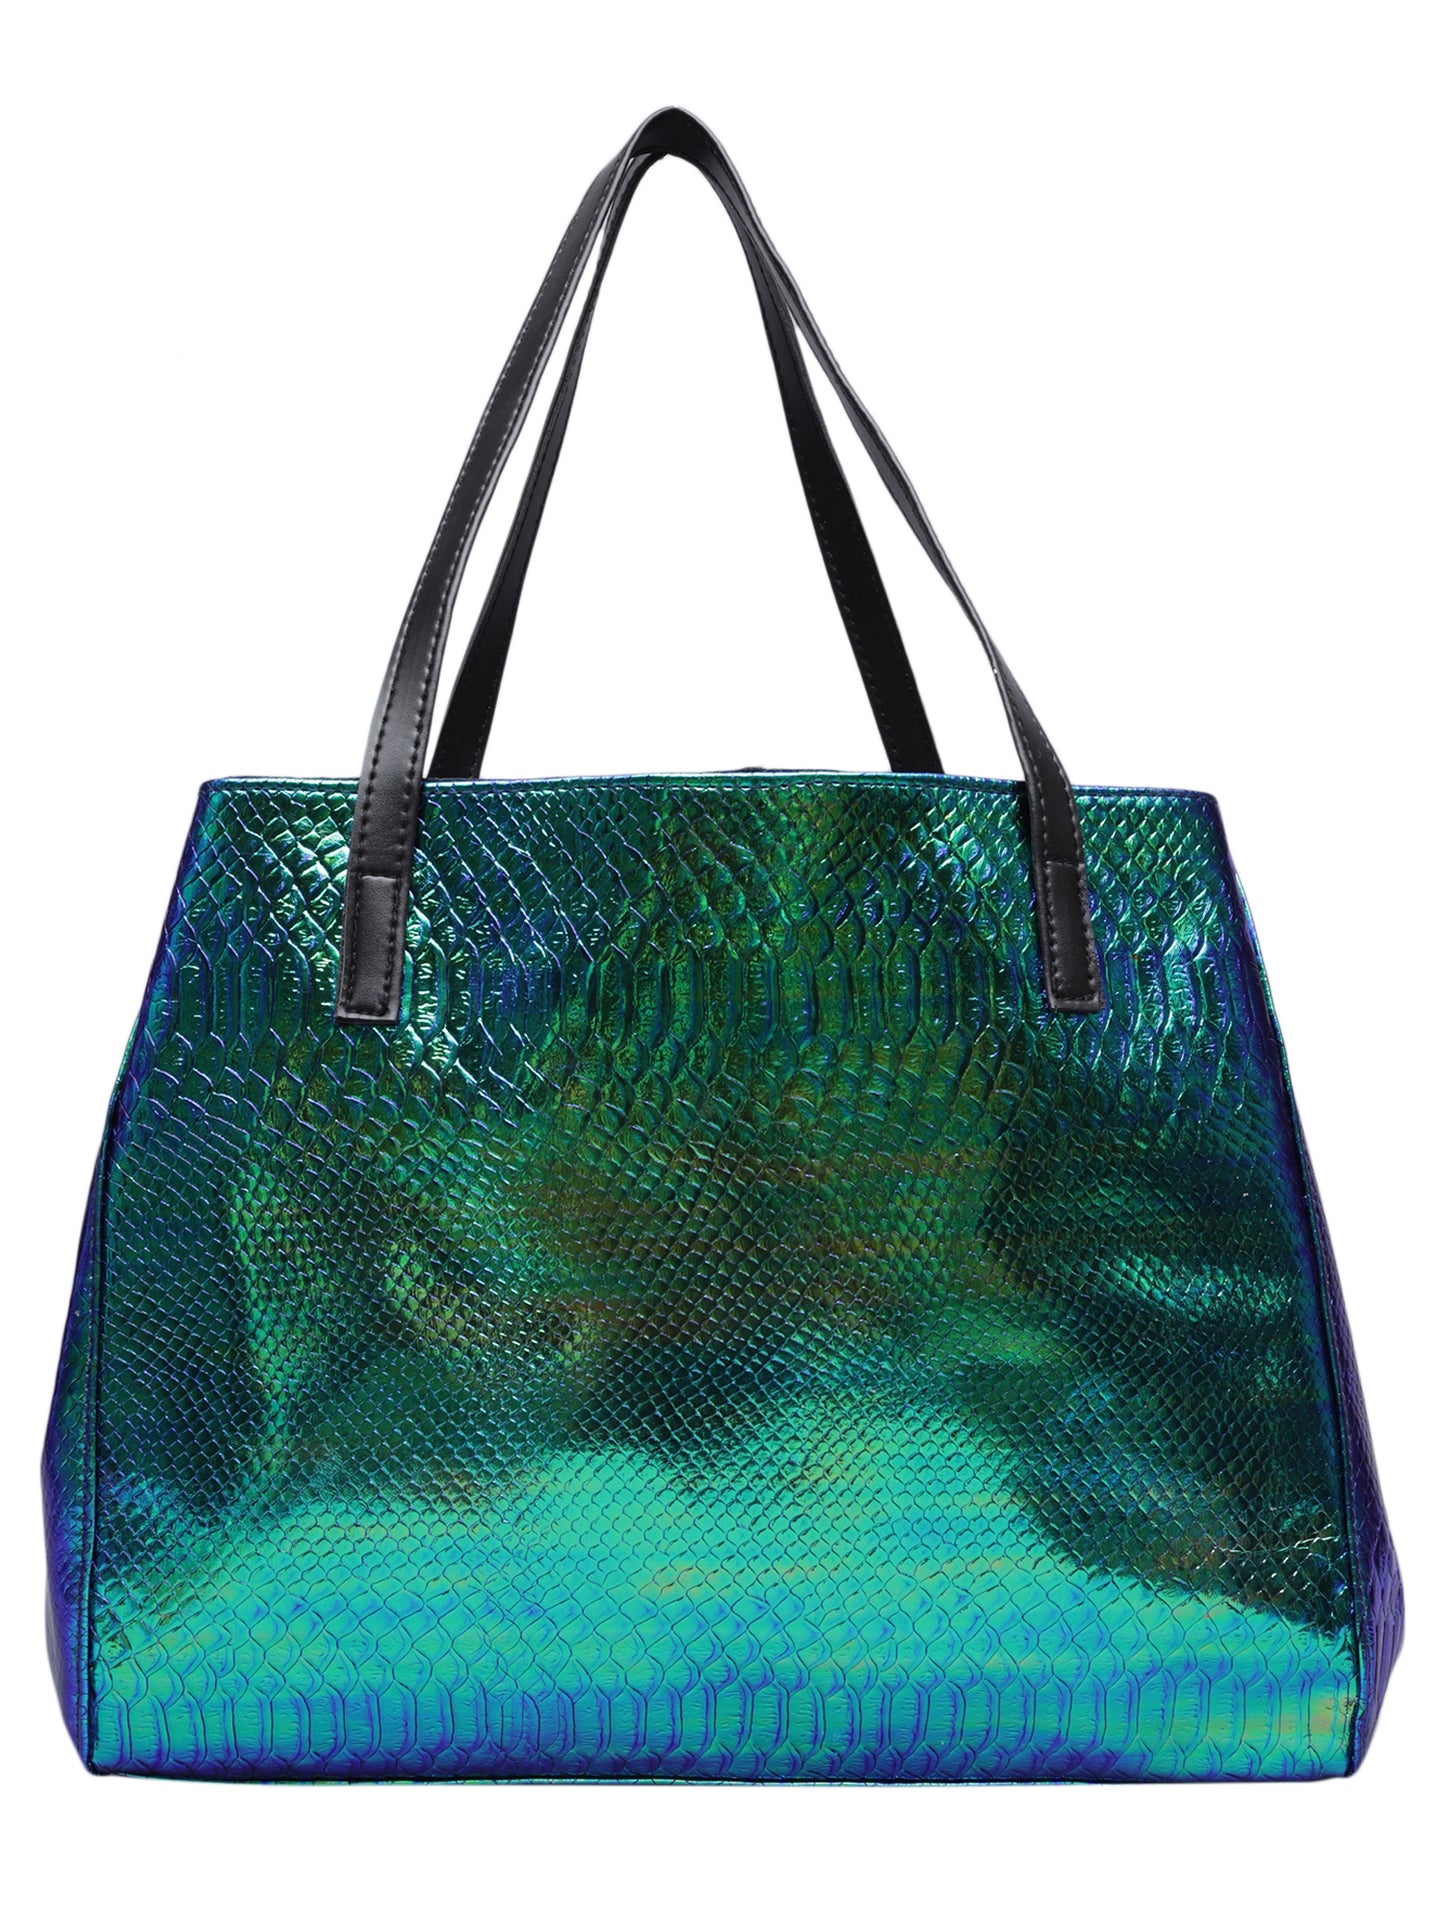 MINI WESST Women's Green  Handbag and  pouch(MWTB004GR)